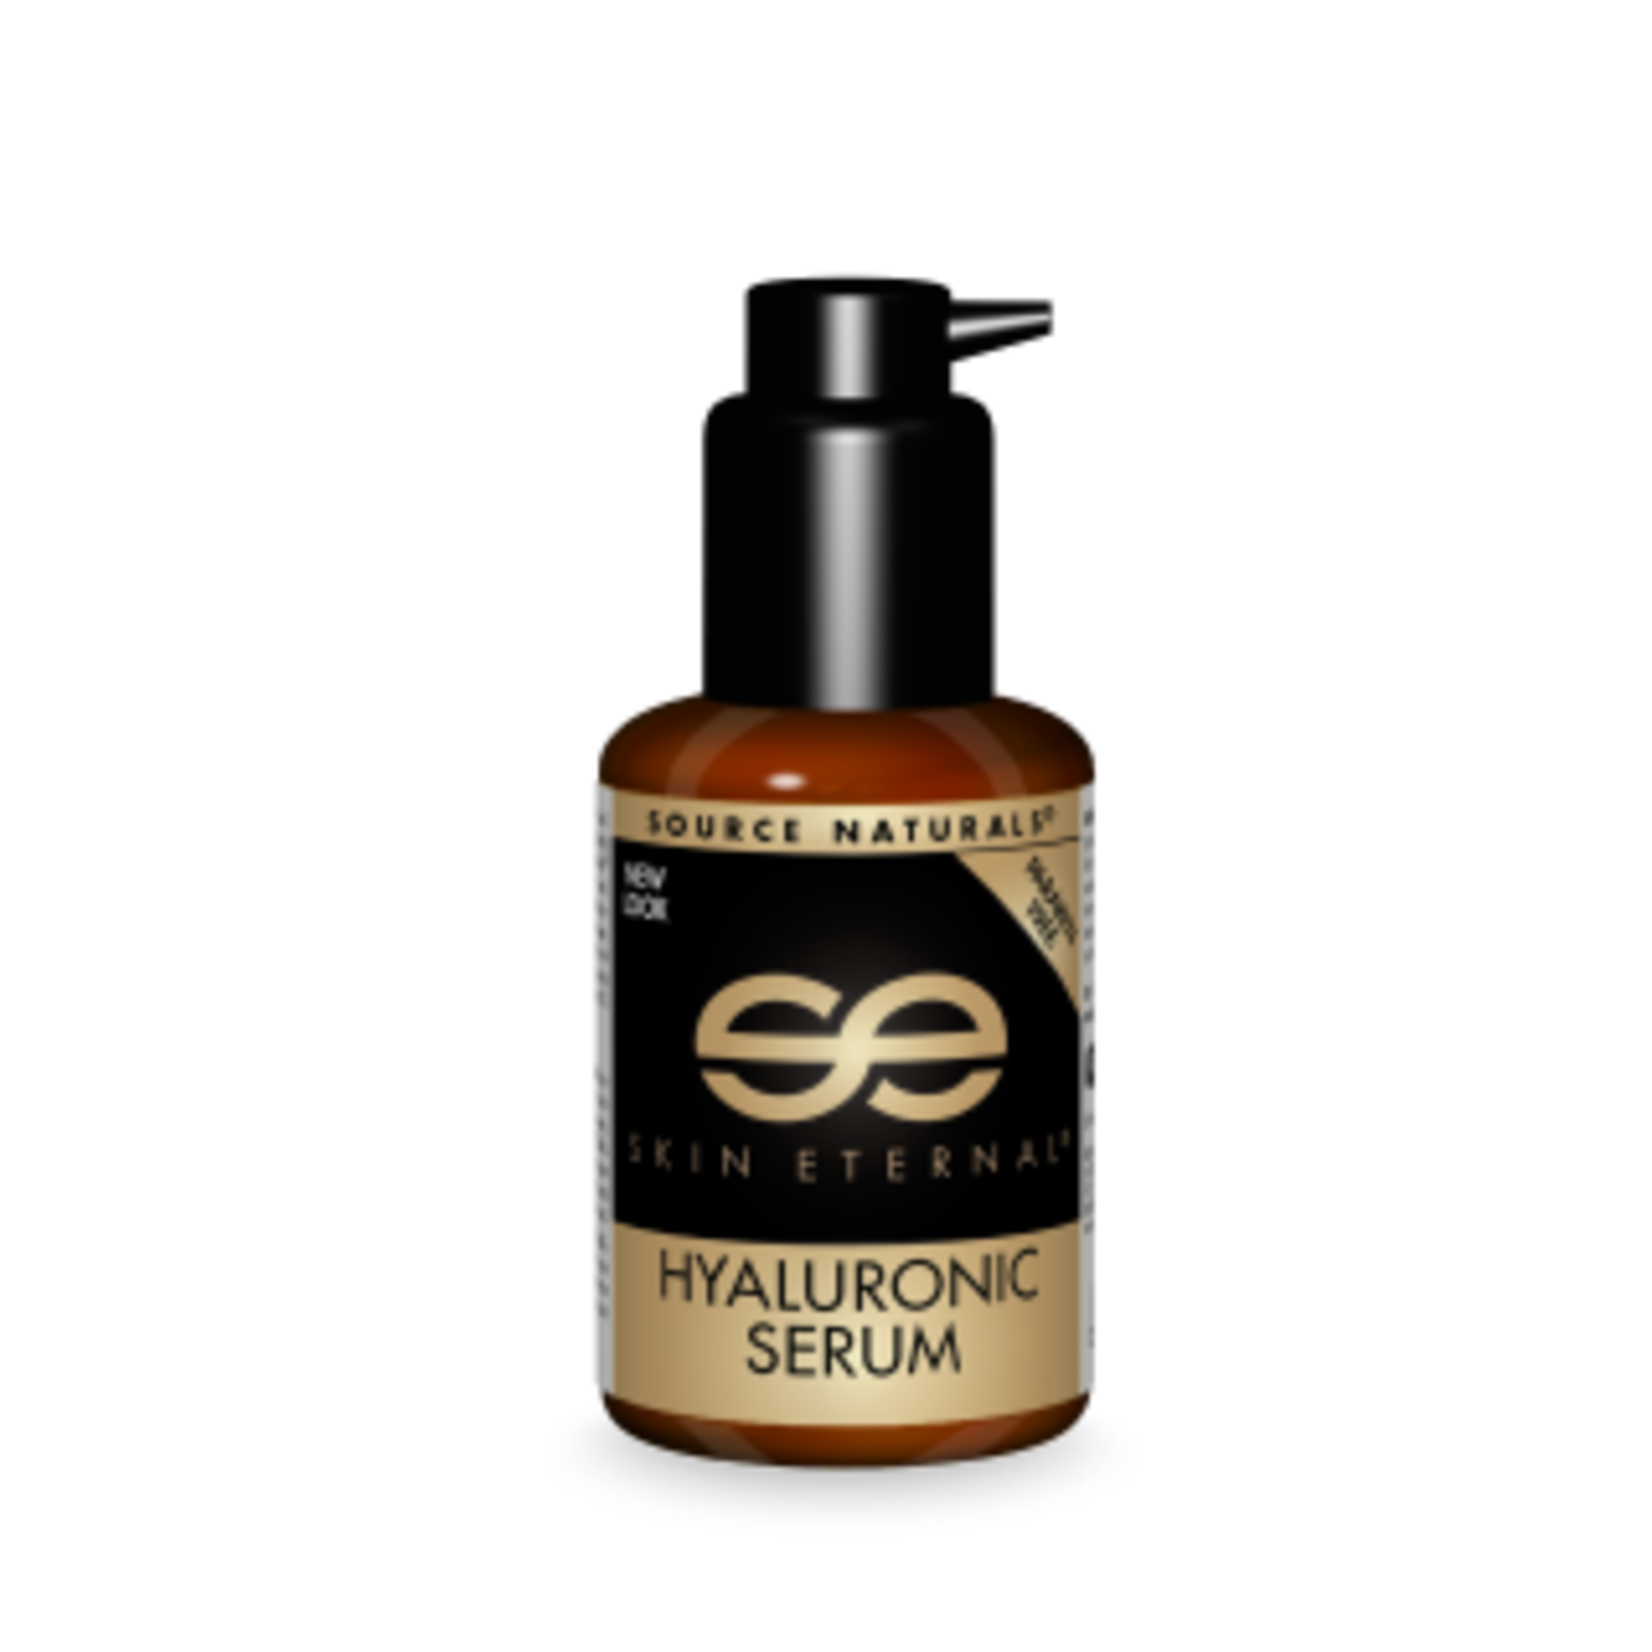 Source Naturals Source Naturals - Skin Eternal Hyaluronic Serum - 1 oz